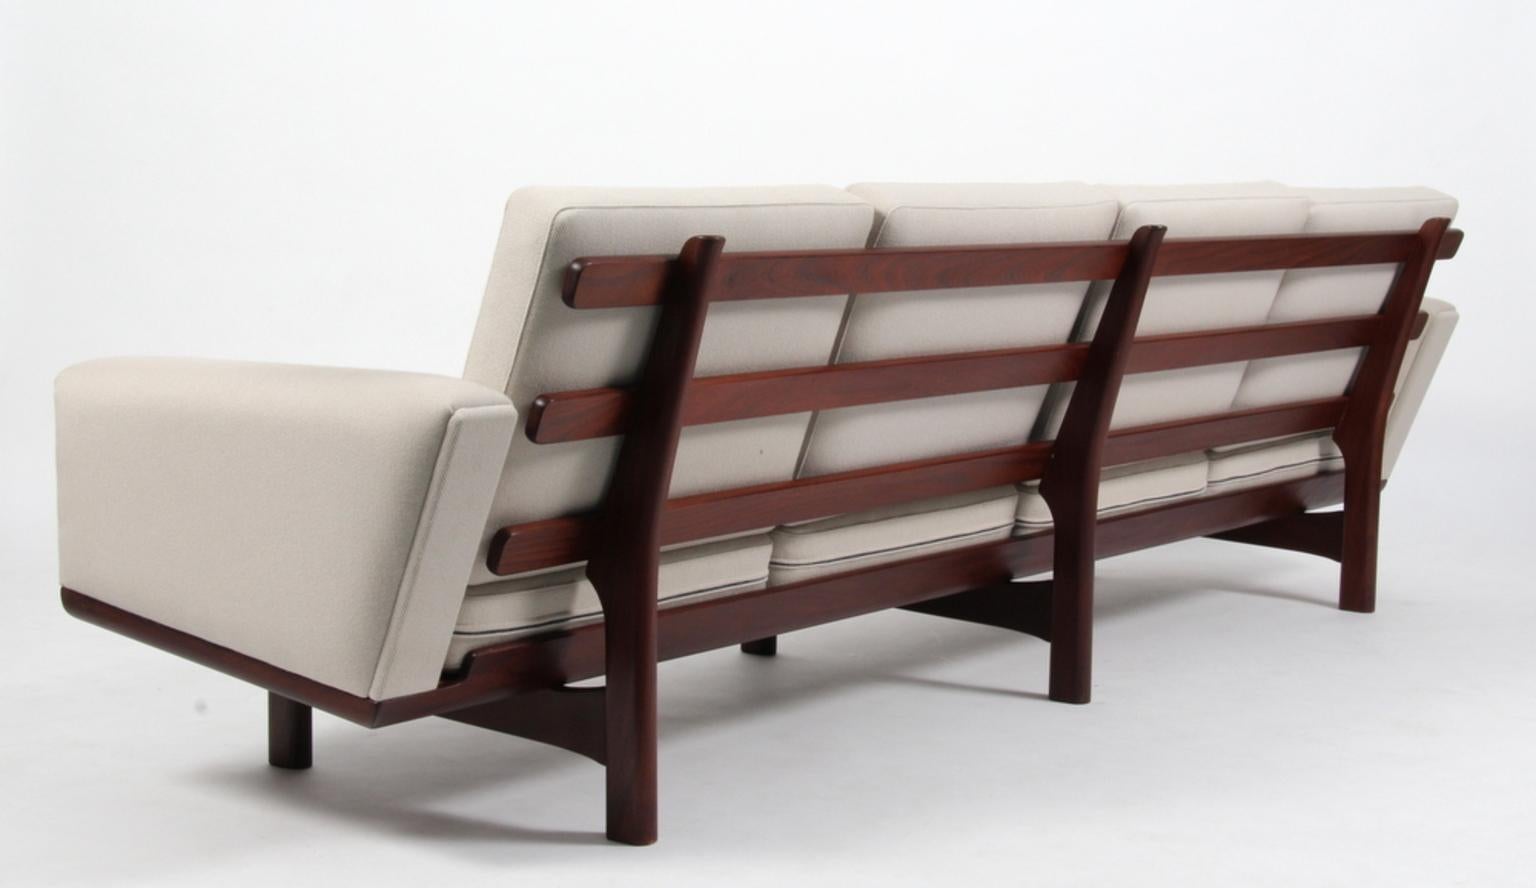 Hans J. Wegner four-seat sofa upholstered with light wool.

Frame in massive teak.

Model 236/4, produced by Getama.